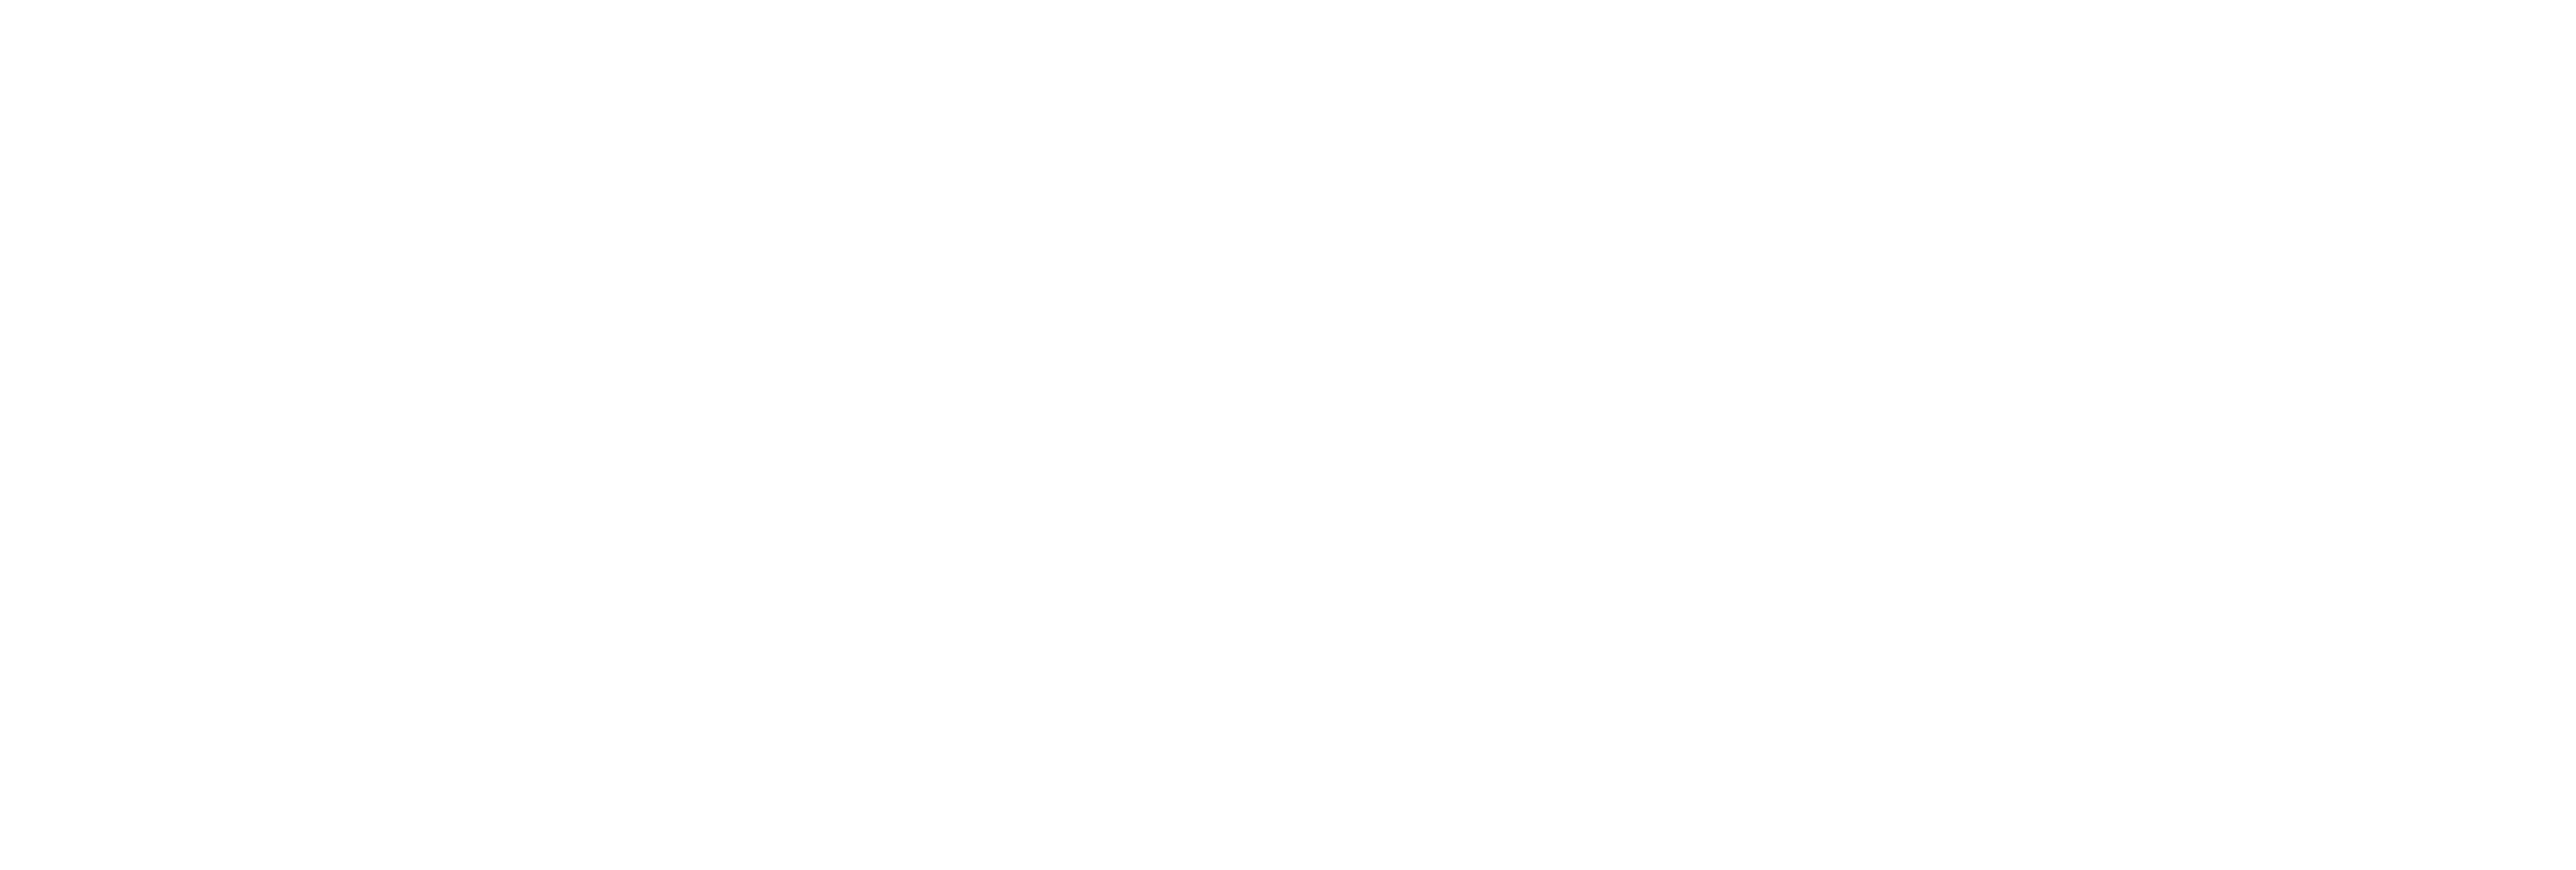 AniCura Canis i Felis Hospital Veterinari logo